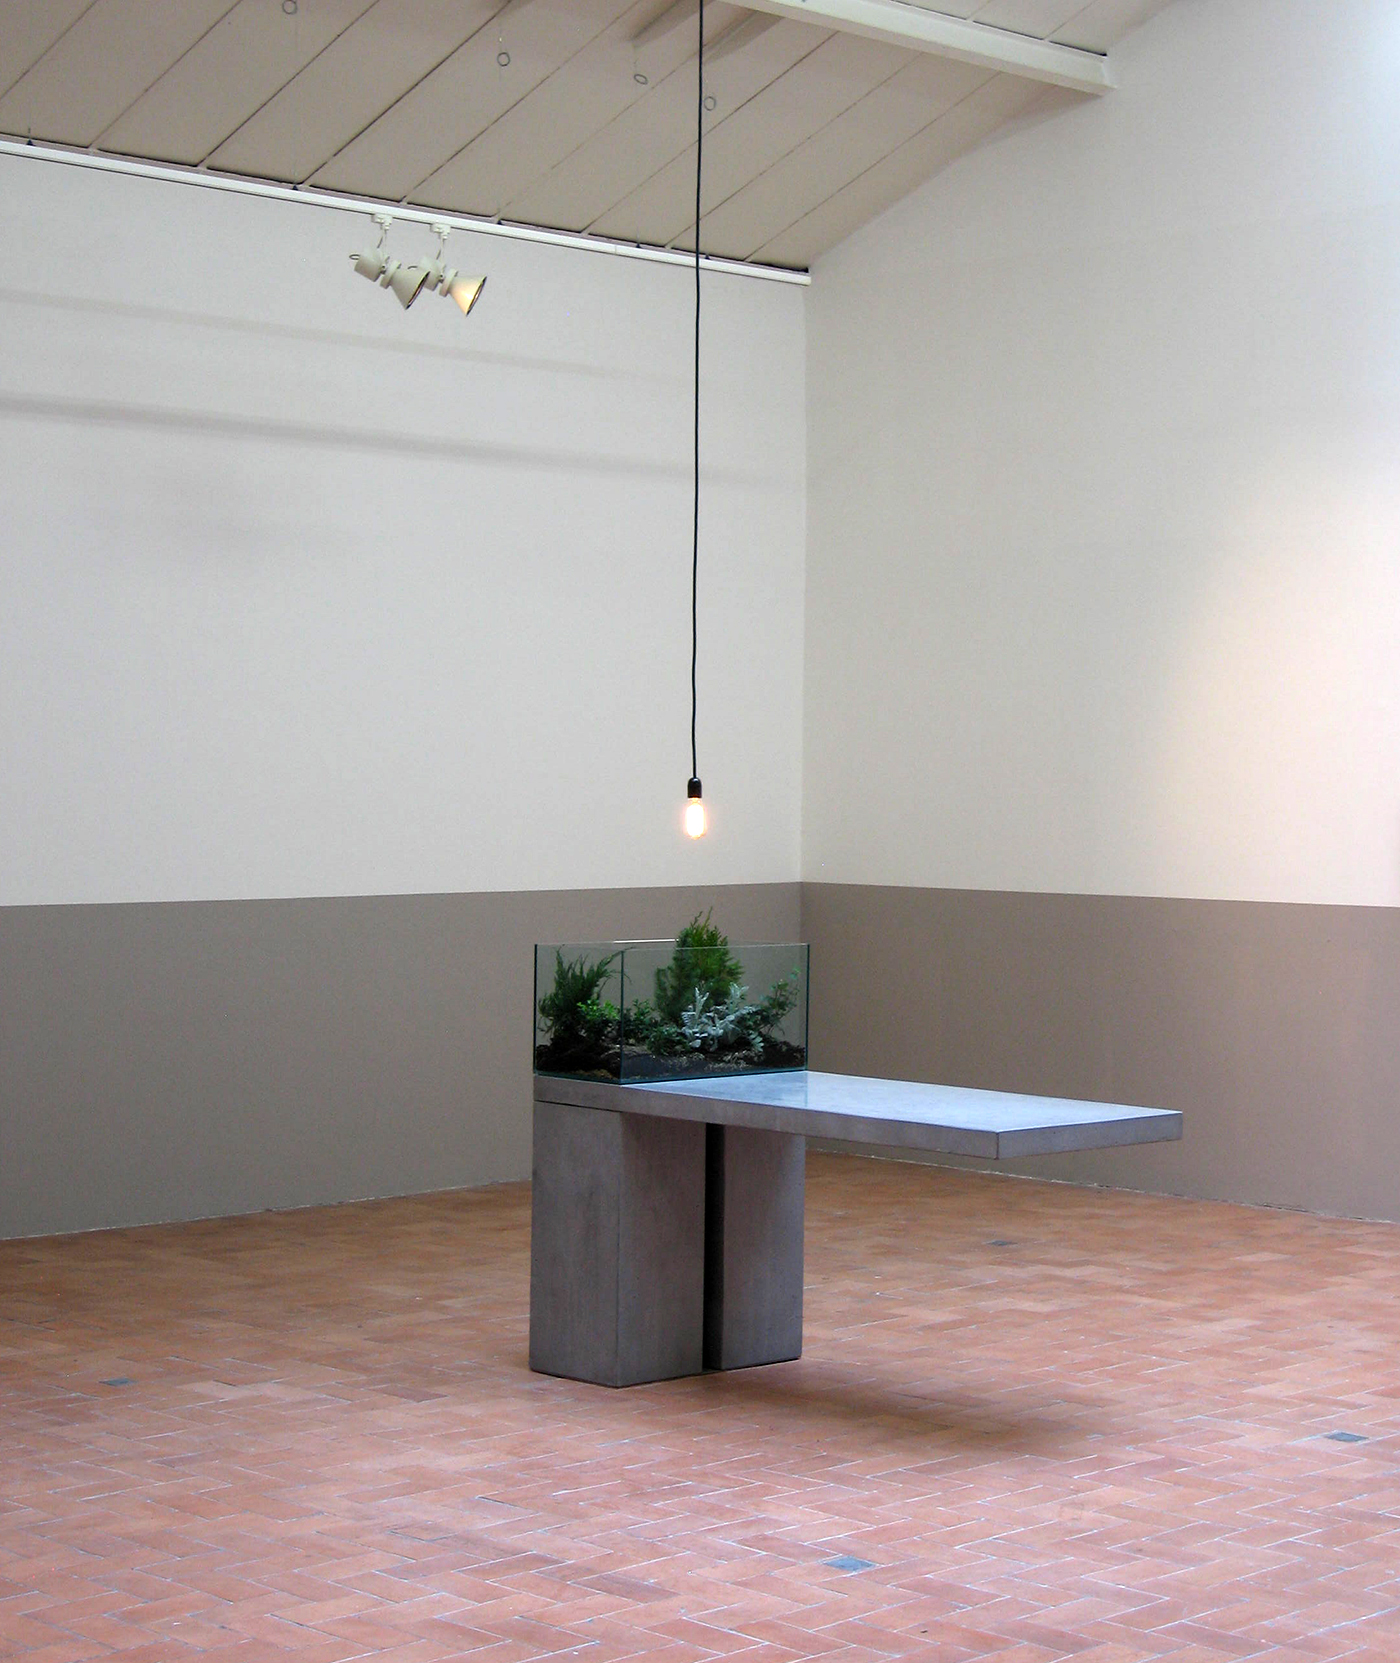 Andrea Blum - Exhibition view, 2013